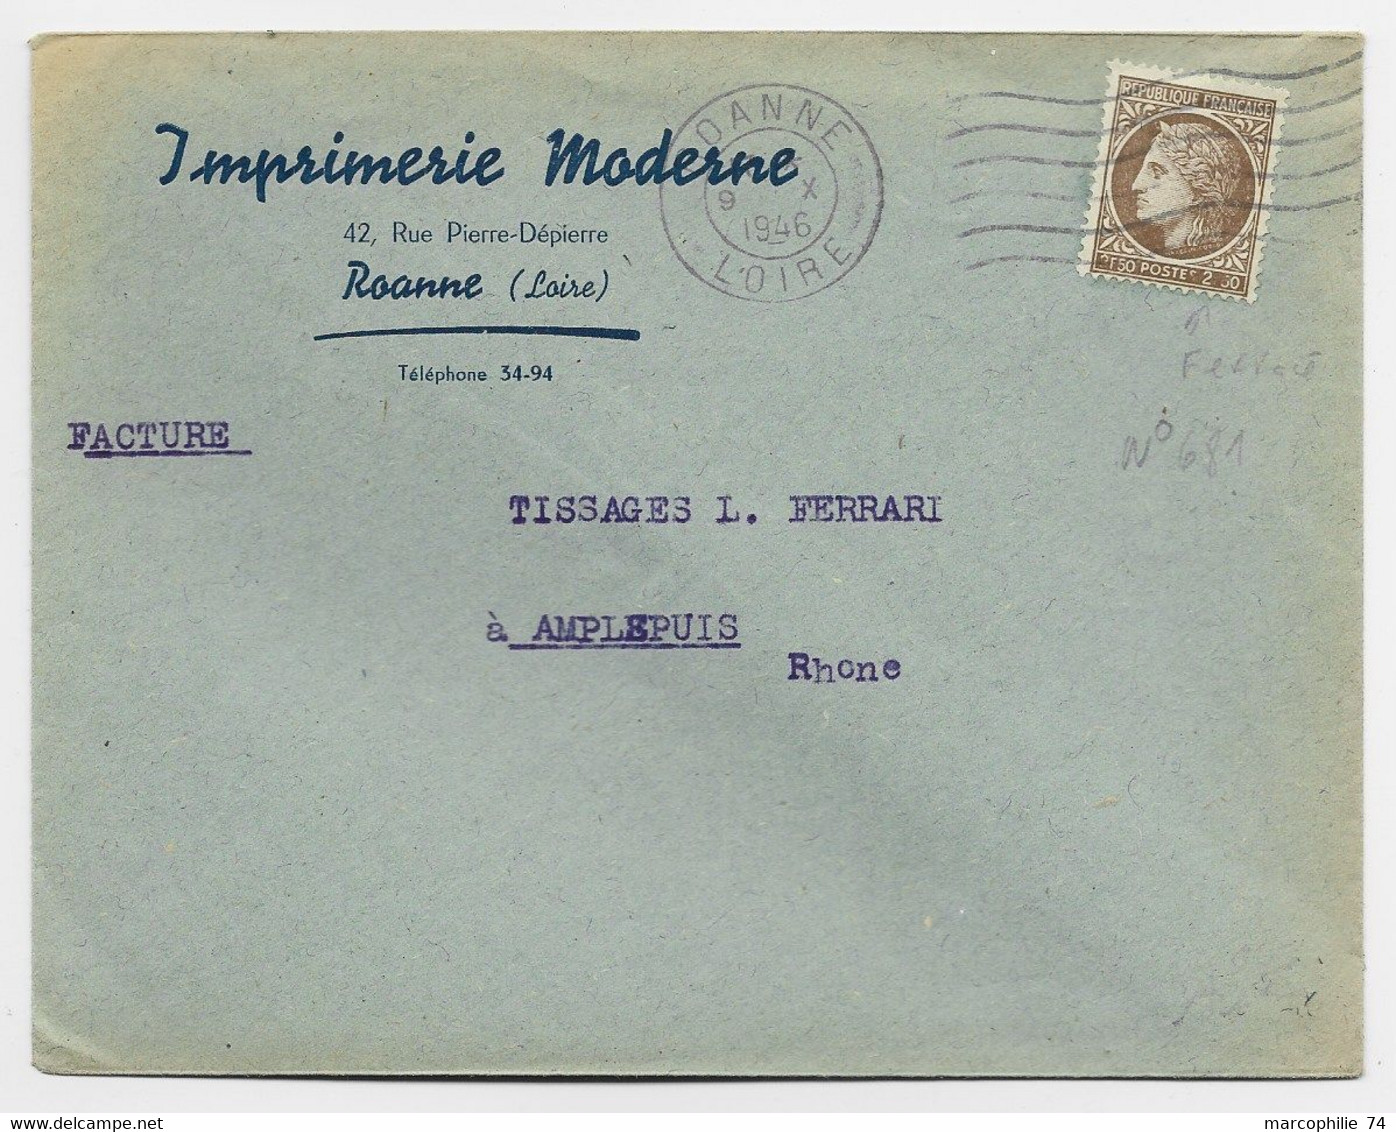 MAZELIN 2FR50 VARIETE F ABSENT SEUL LETTRE ROANNE 9.X.1946 TARIF FACTURE - 1945-47 Ceres Of Mazelin